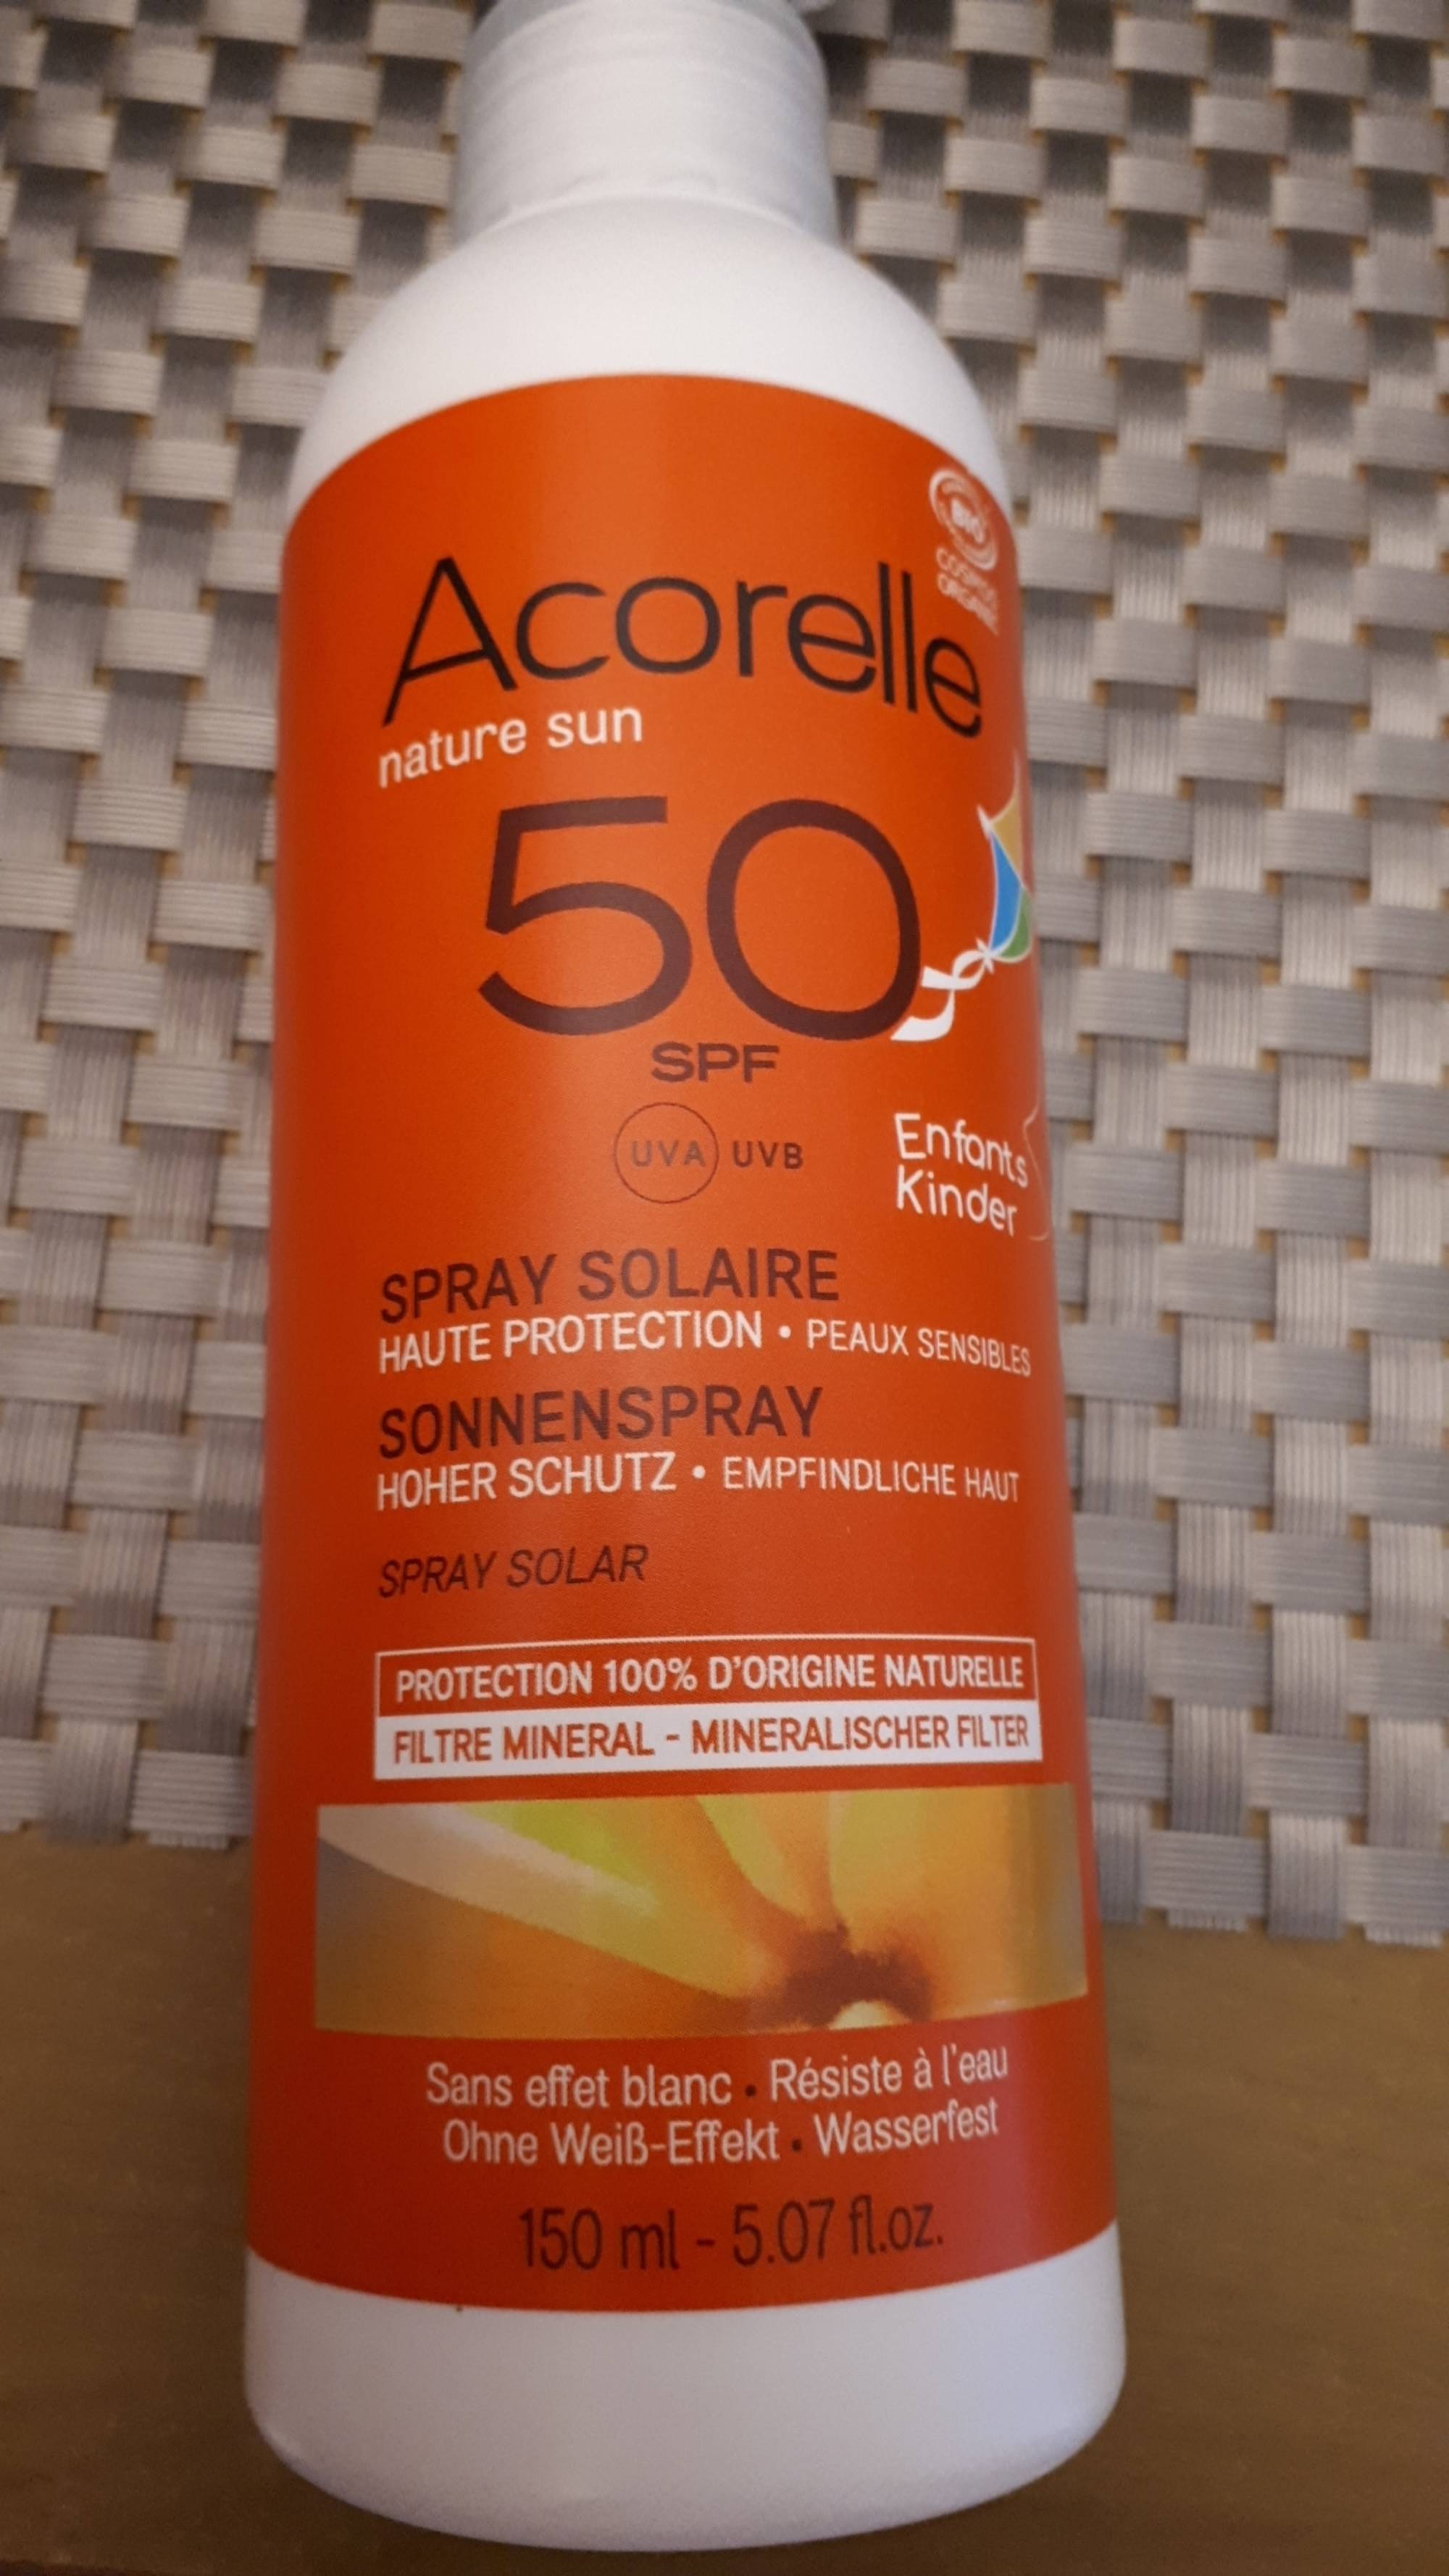 ACORELLE - Nature sun - Spray solaire SPF 50